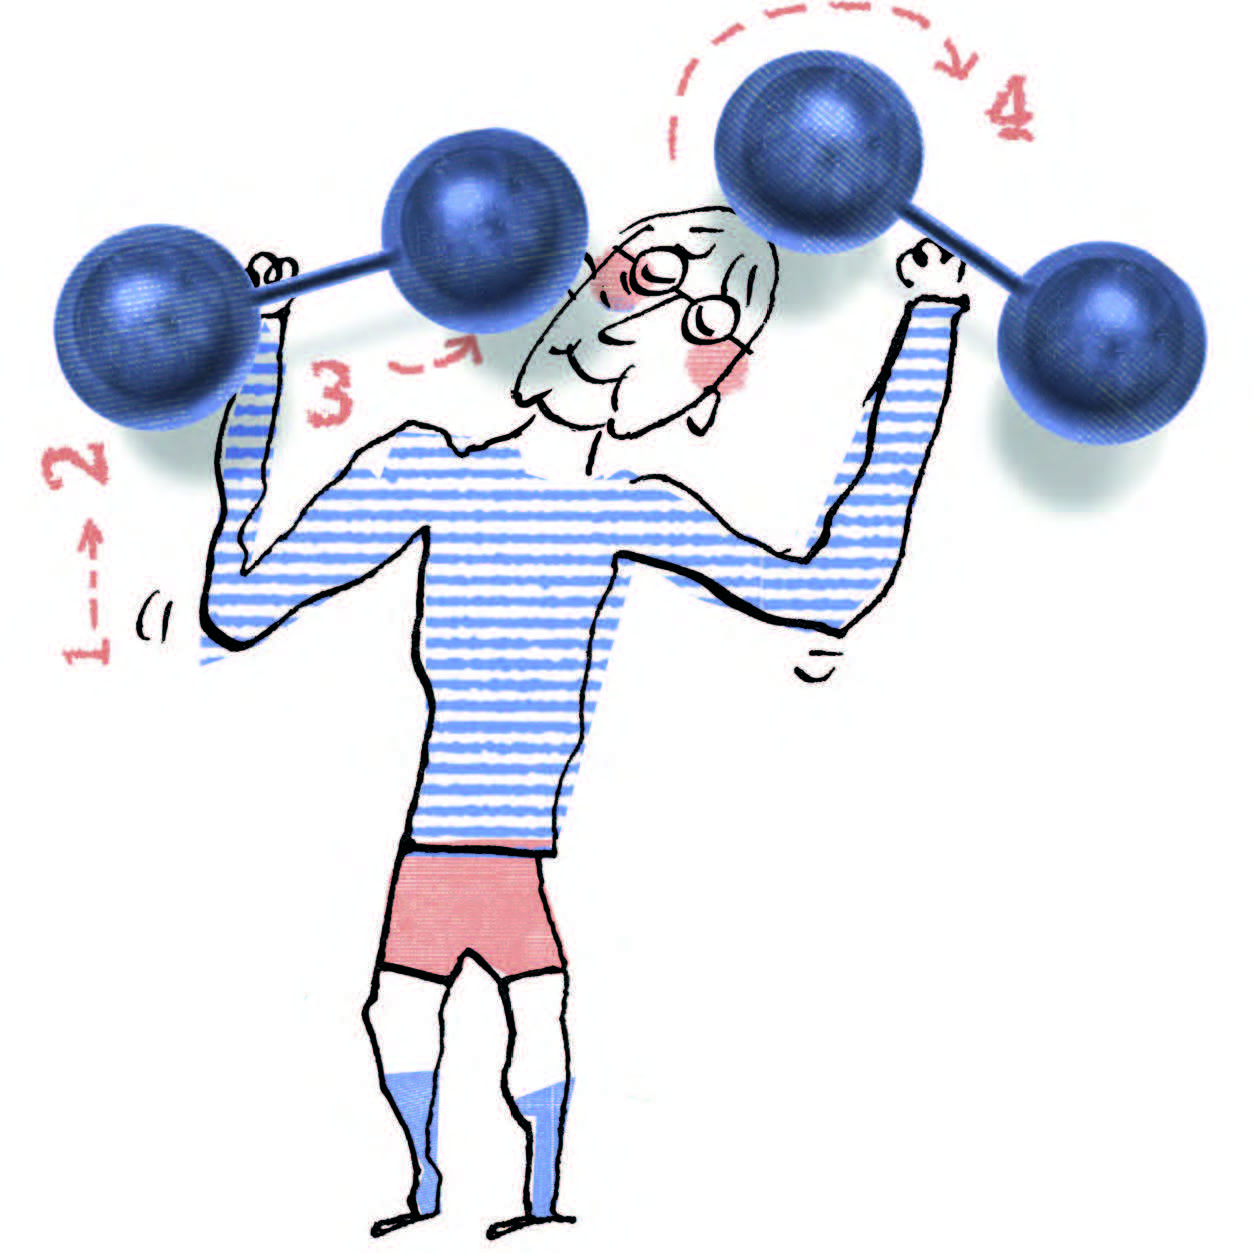 Illustration of man with dumb bells 